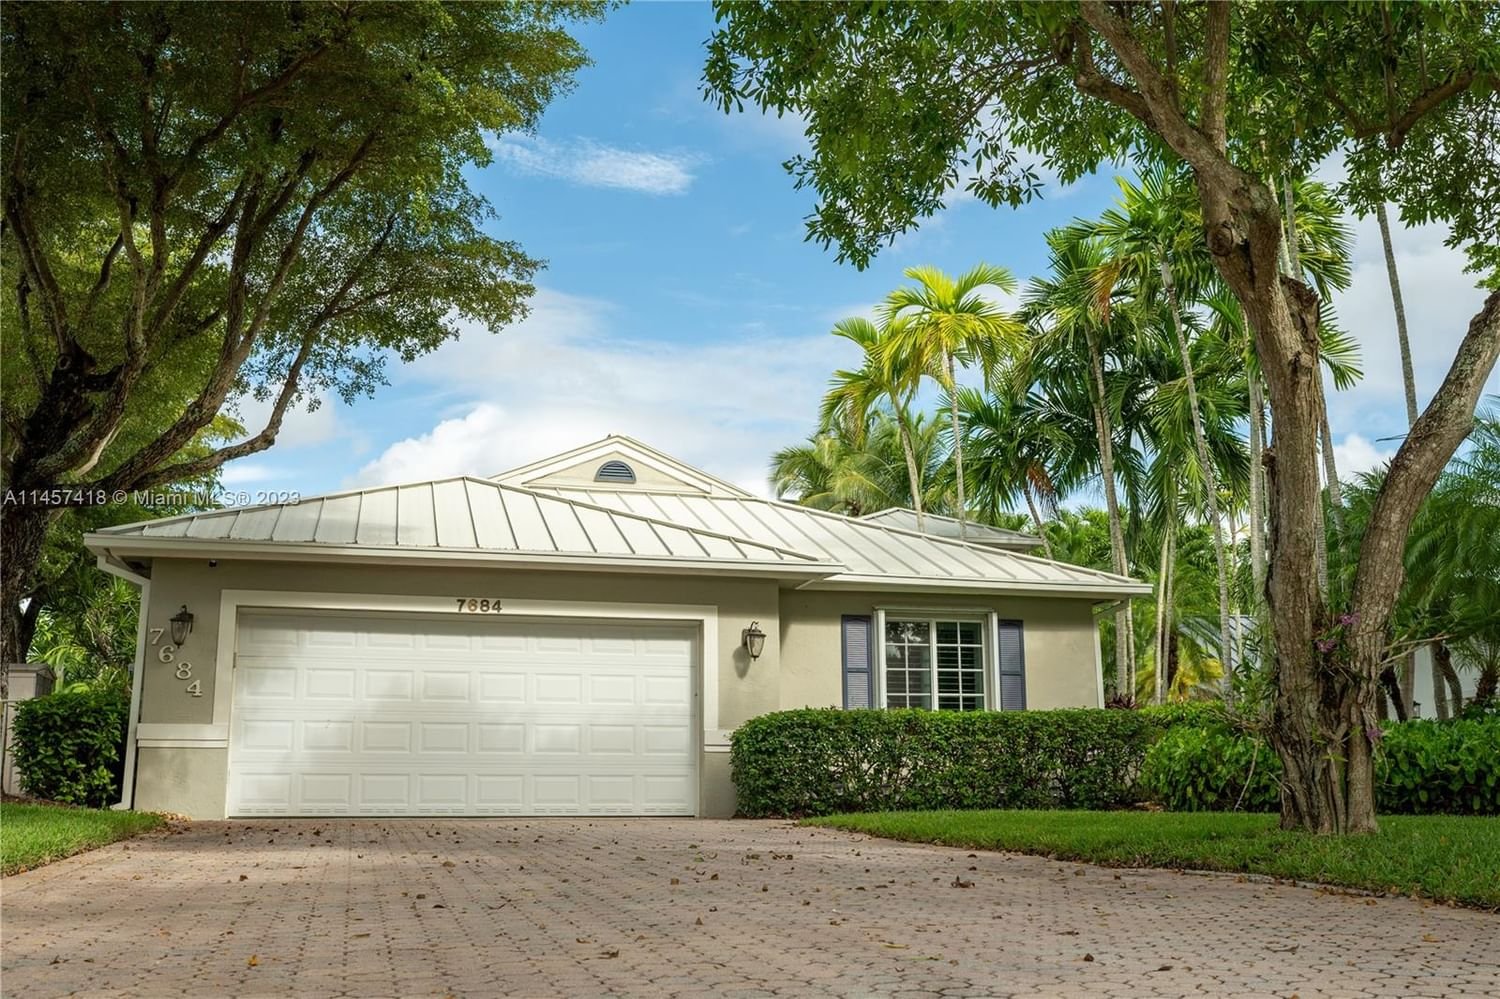 Real estate property located at 7684 160th Ave, Miami-Dade County, Miami, FL